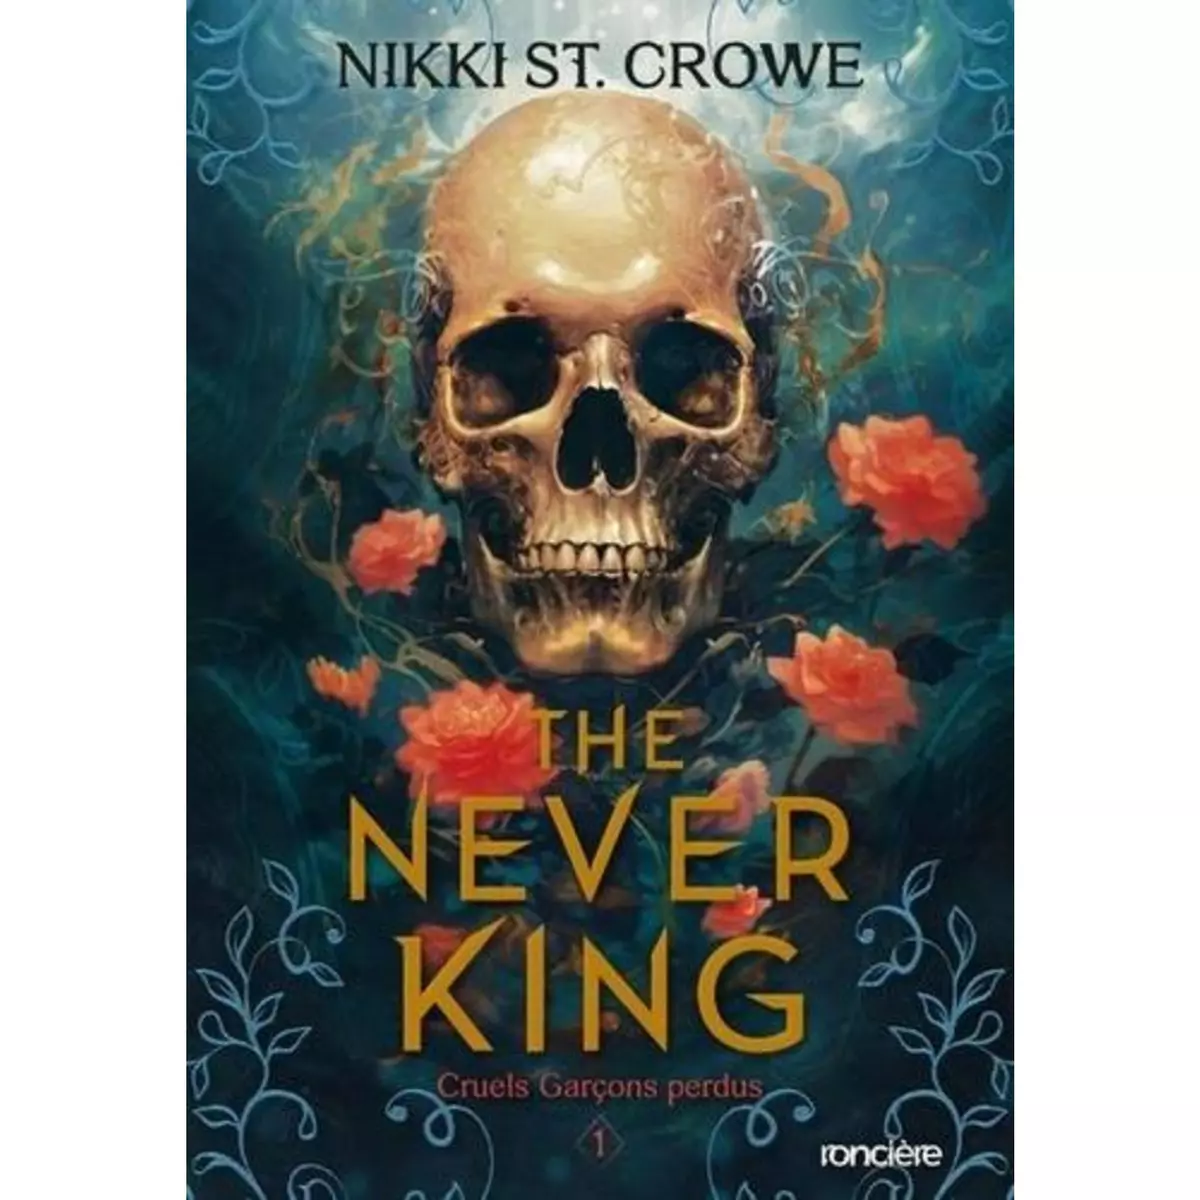  CRUELS GARCONS PERDUS TOME 1 : THE NEVER KING, St. Crowe Nikki